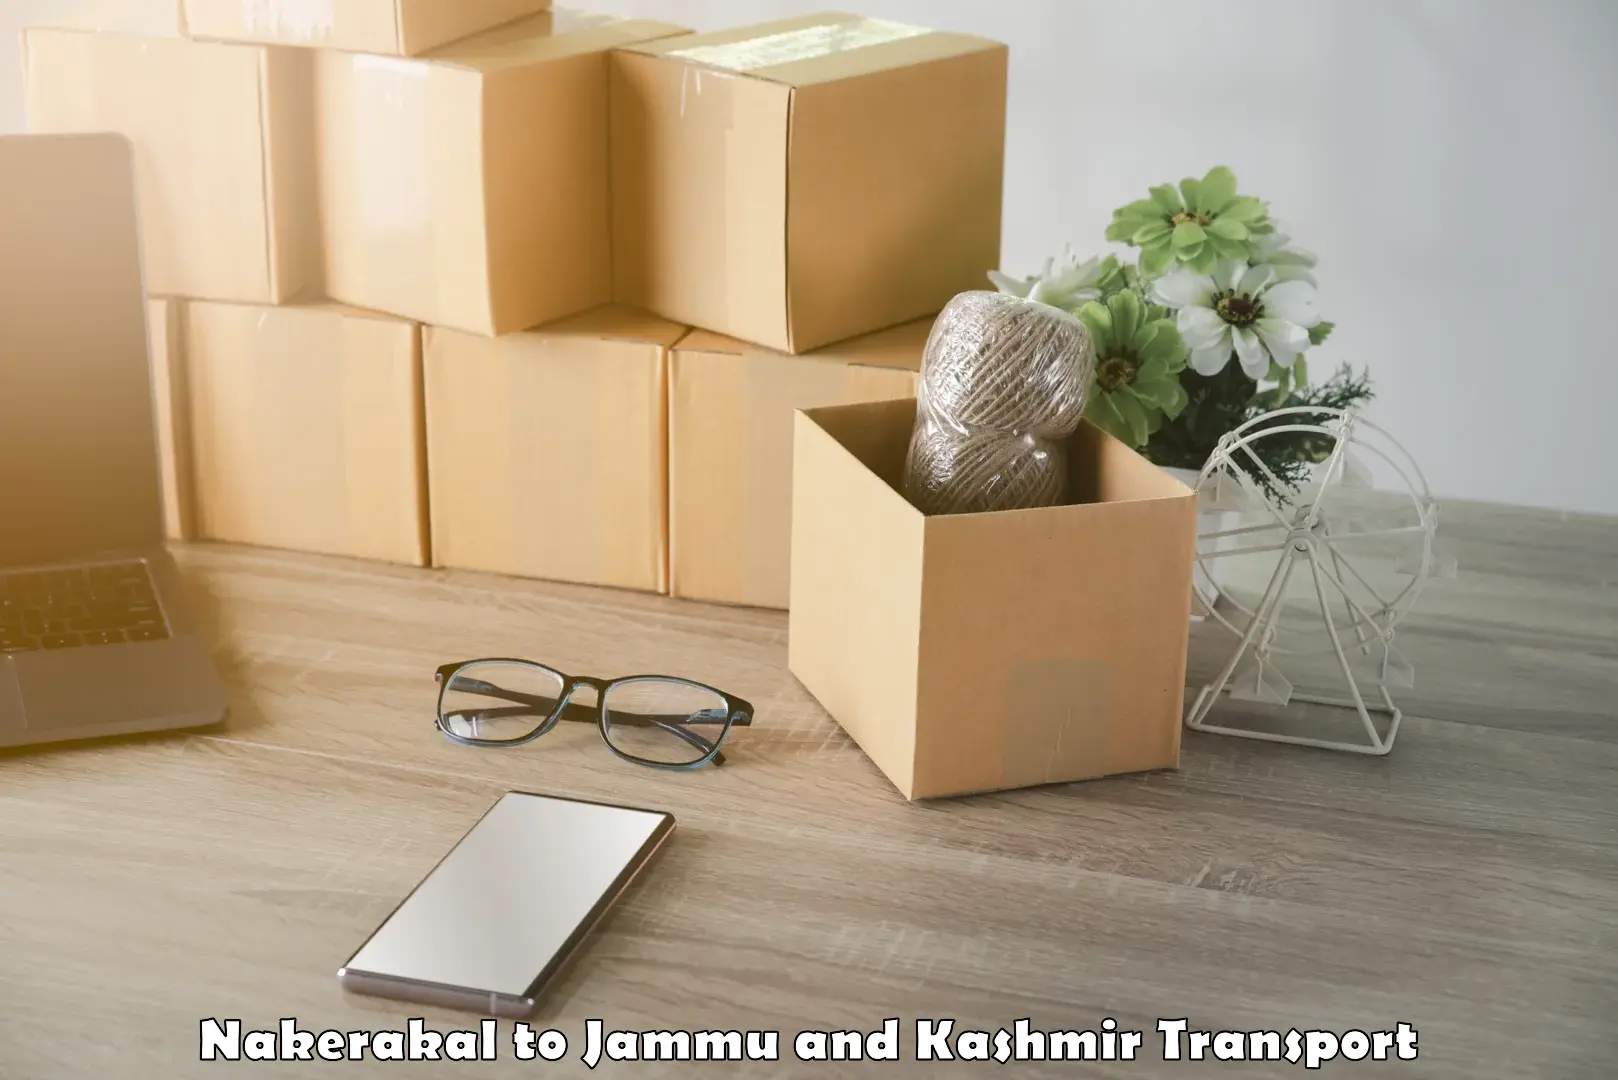 Online transport service Nakerakal to IIT Jammu